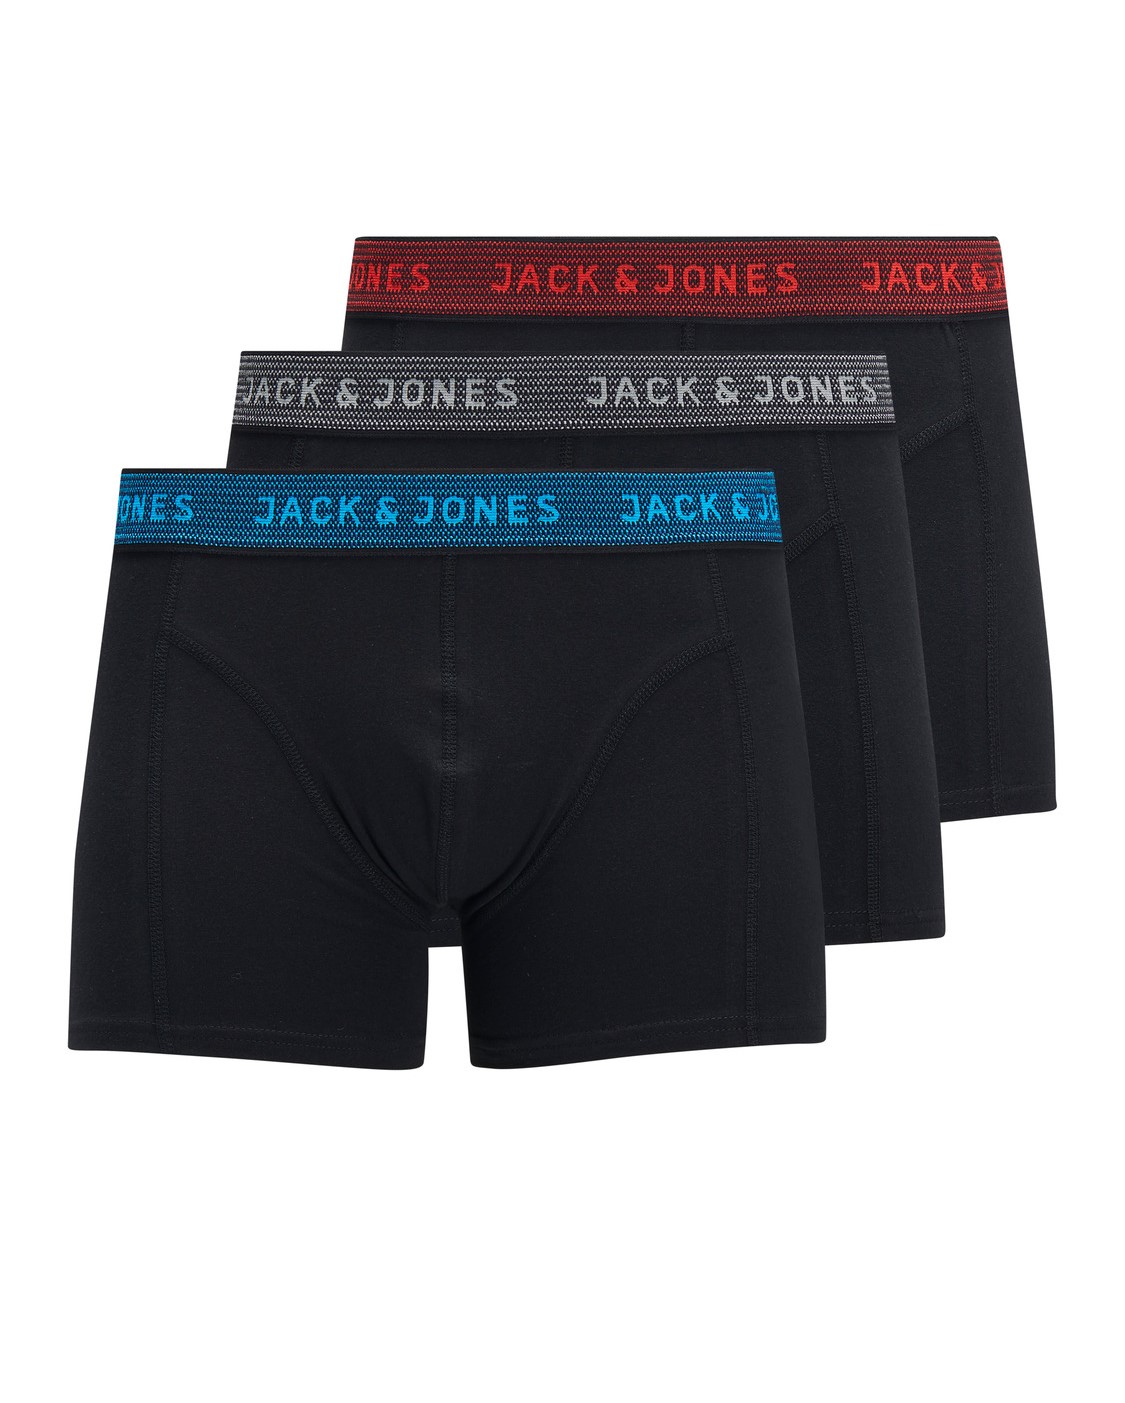 Jacwastband Boxers 3Pak Jack и Jones Grey L